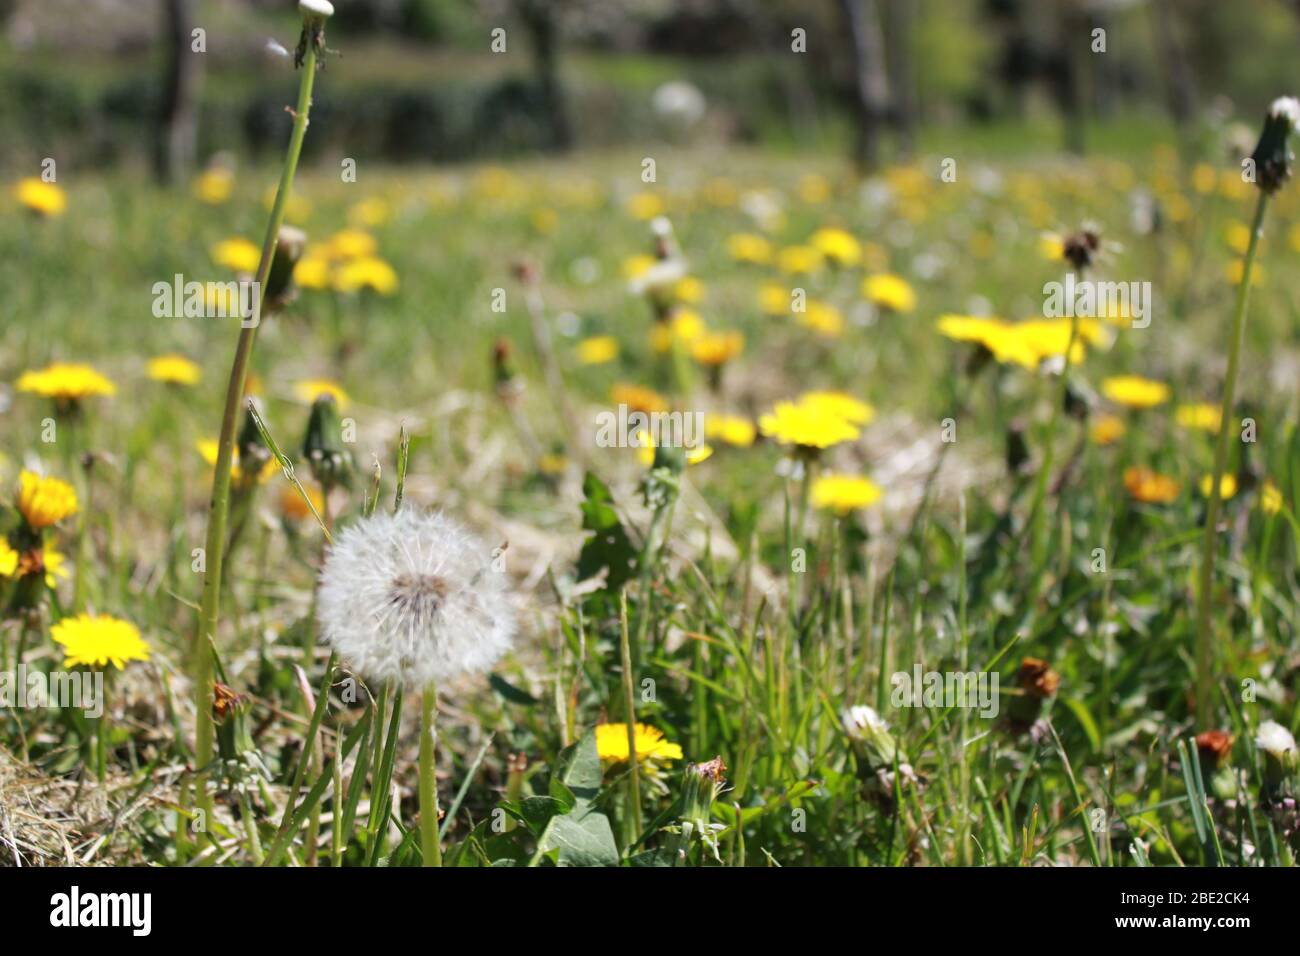 Dandelions in a field with dandelion clock Stock Photo